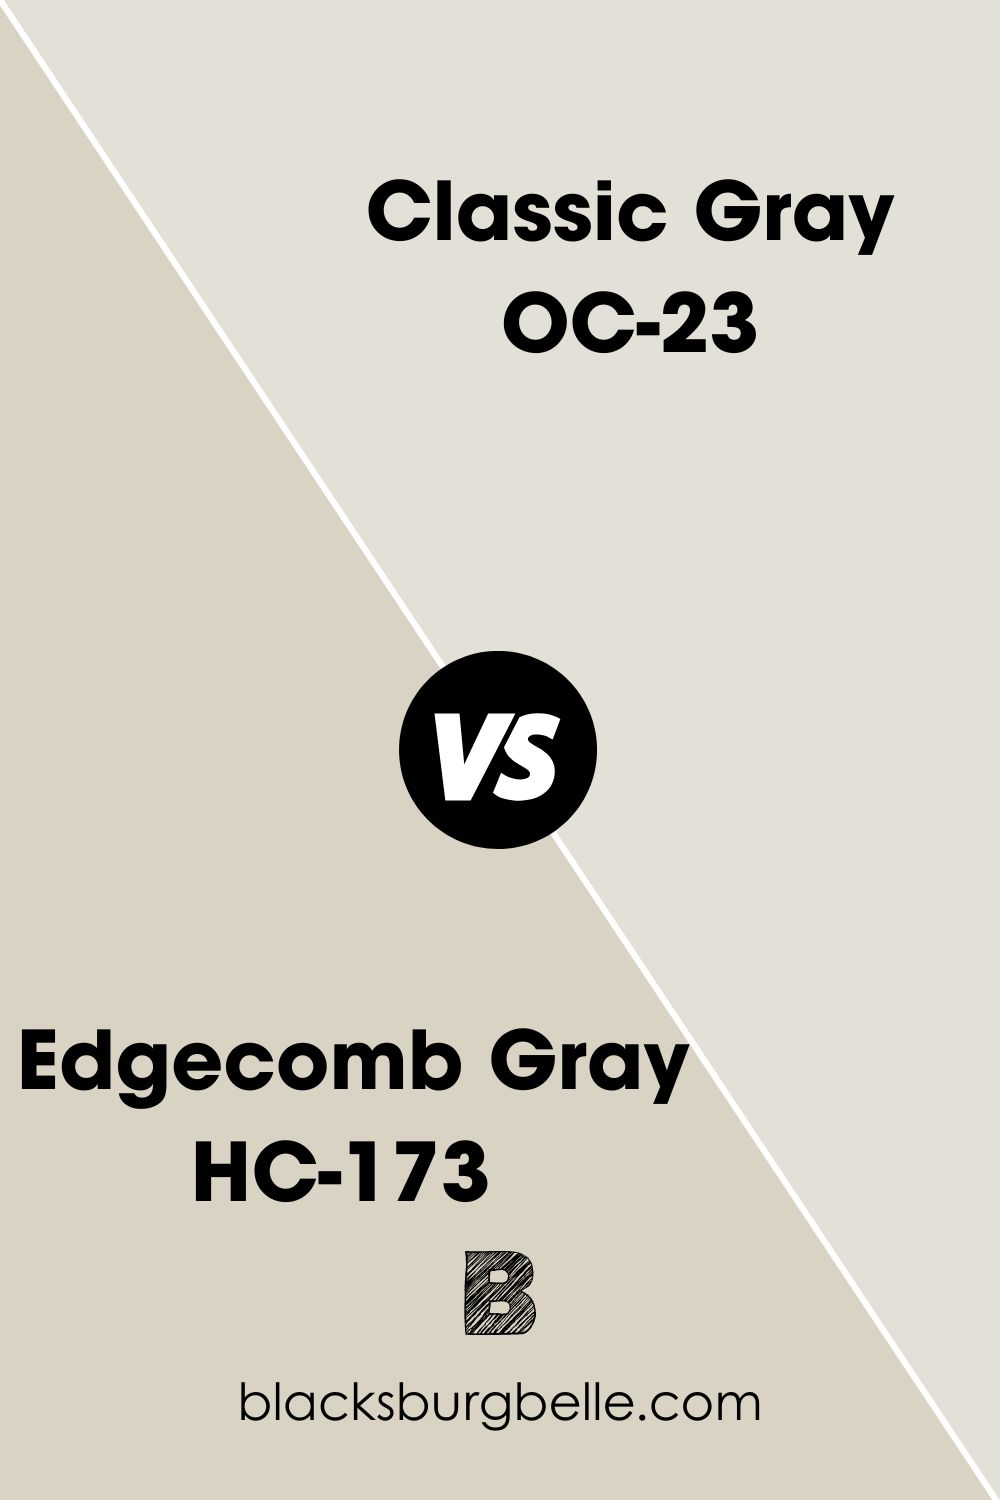 Edgecomb Gray HC-173